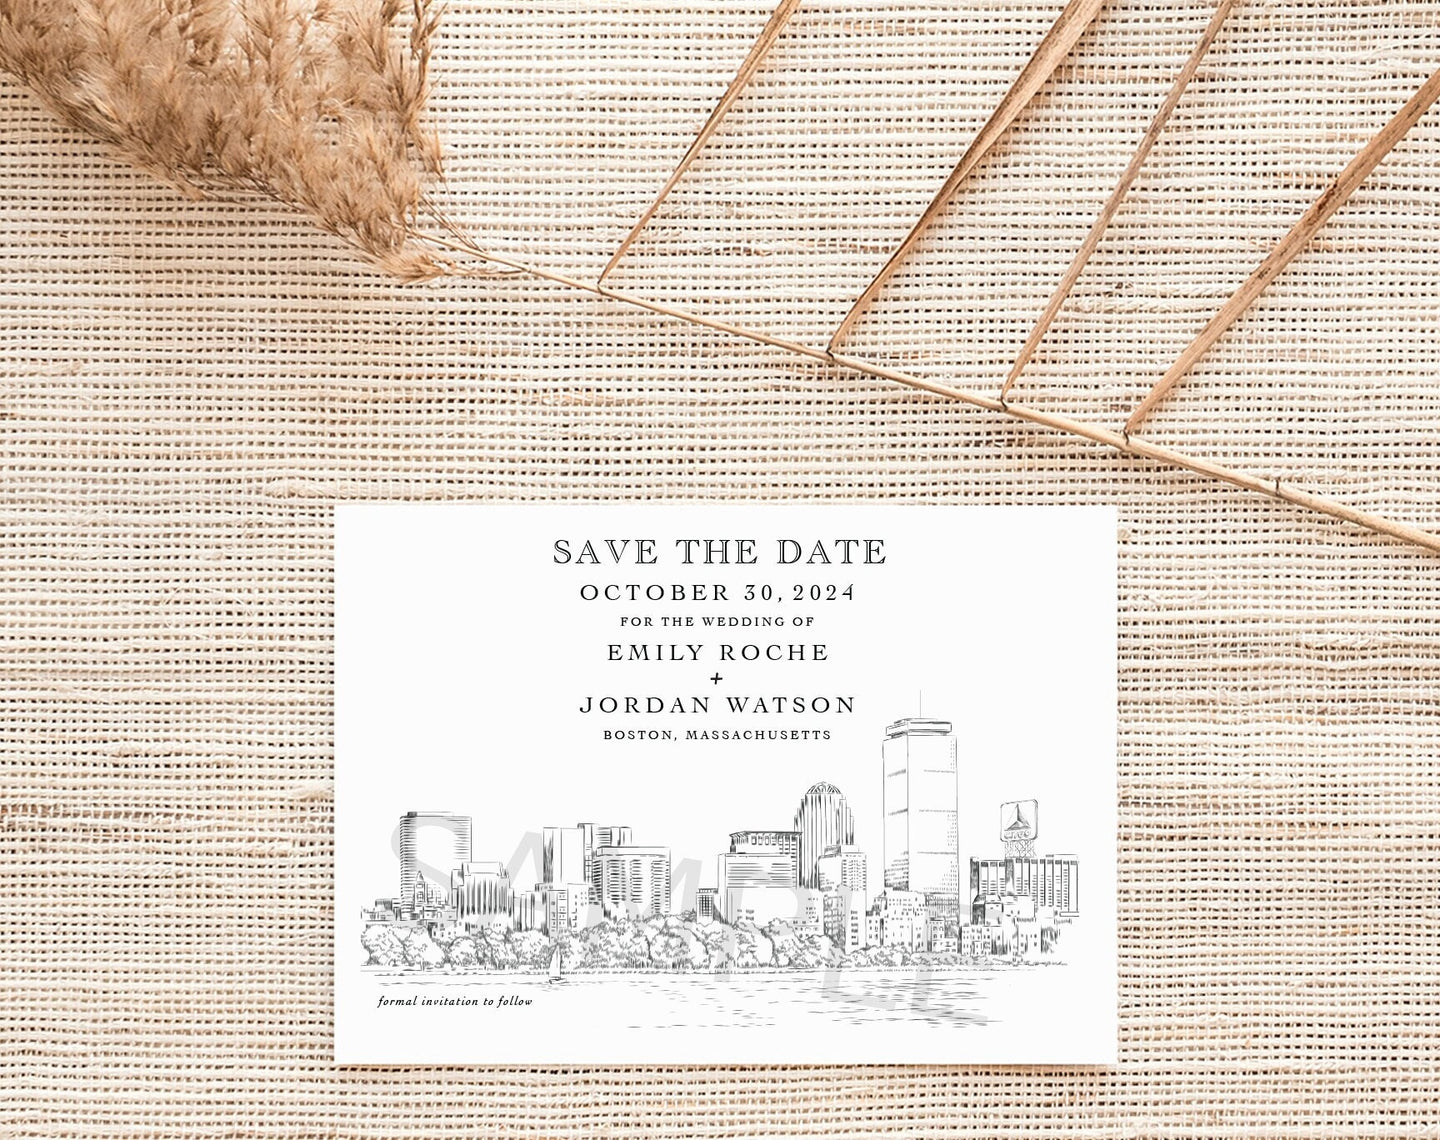 Boston Wedding, Boston Save the Date Cards, Save the Dates, Boston Skyline, STD, Hand Drawn (set of 25 cards & envelopes)